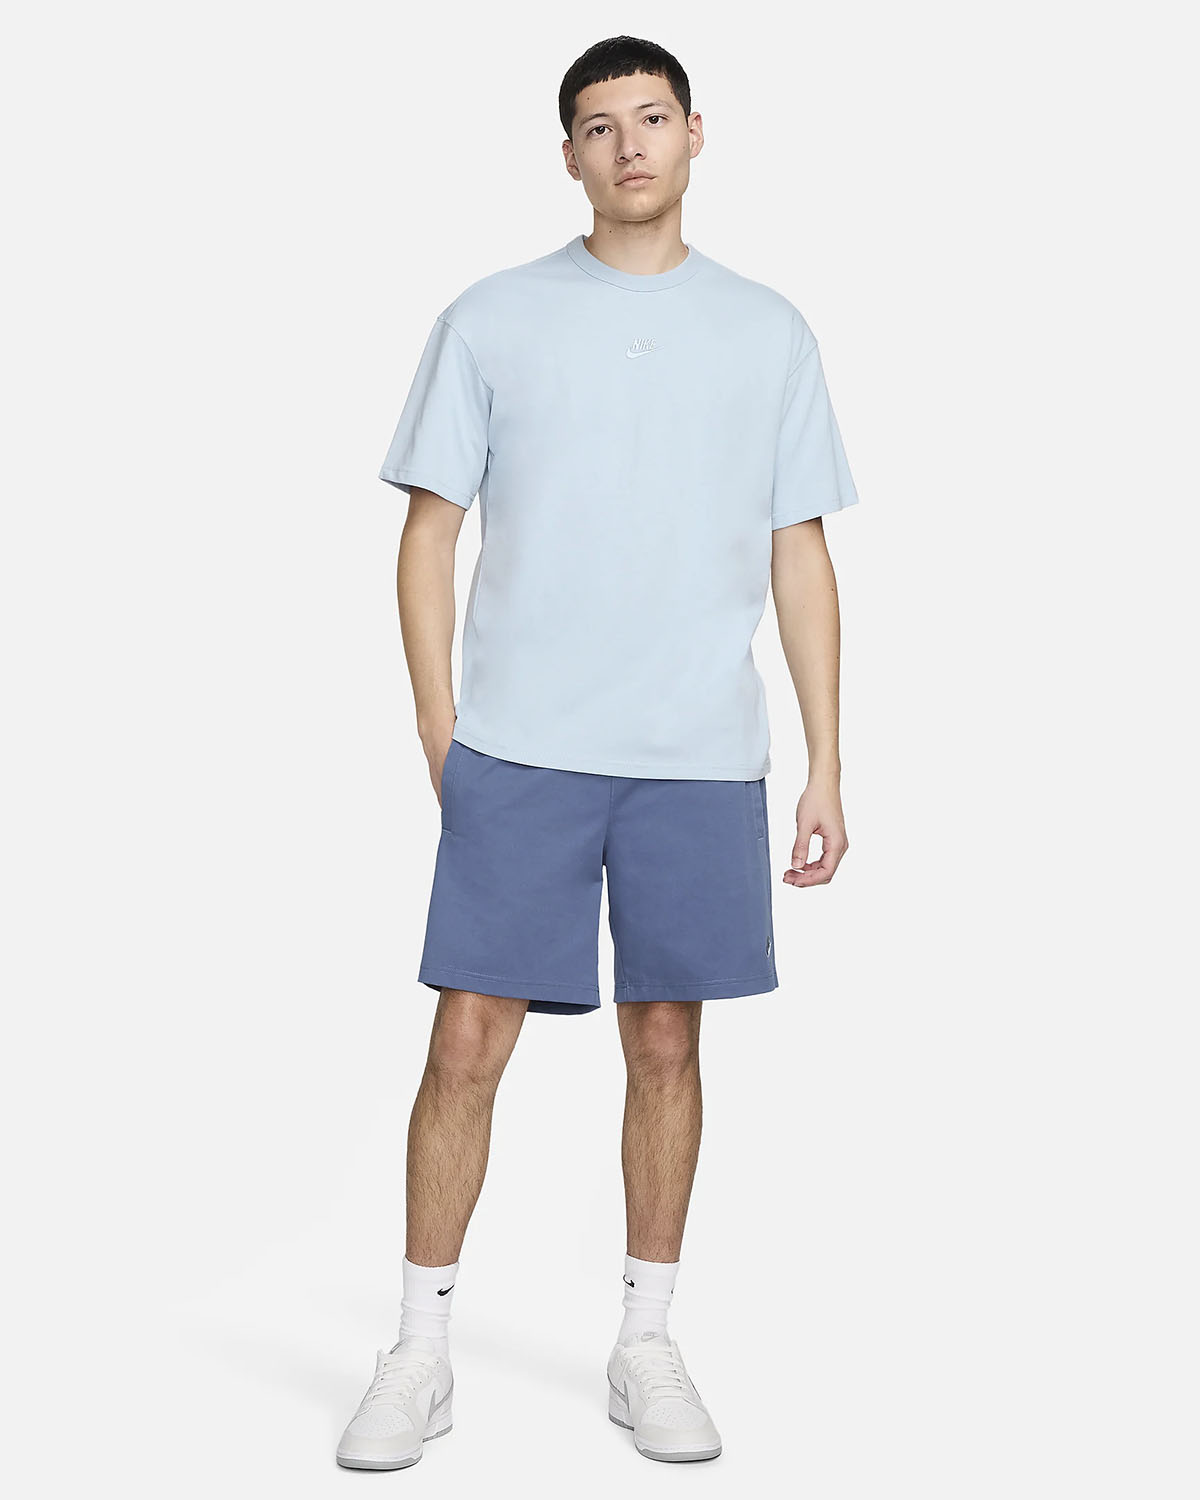 Nike Sportswear Premium Essentials T Shirt Light Armory Blue Outfit